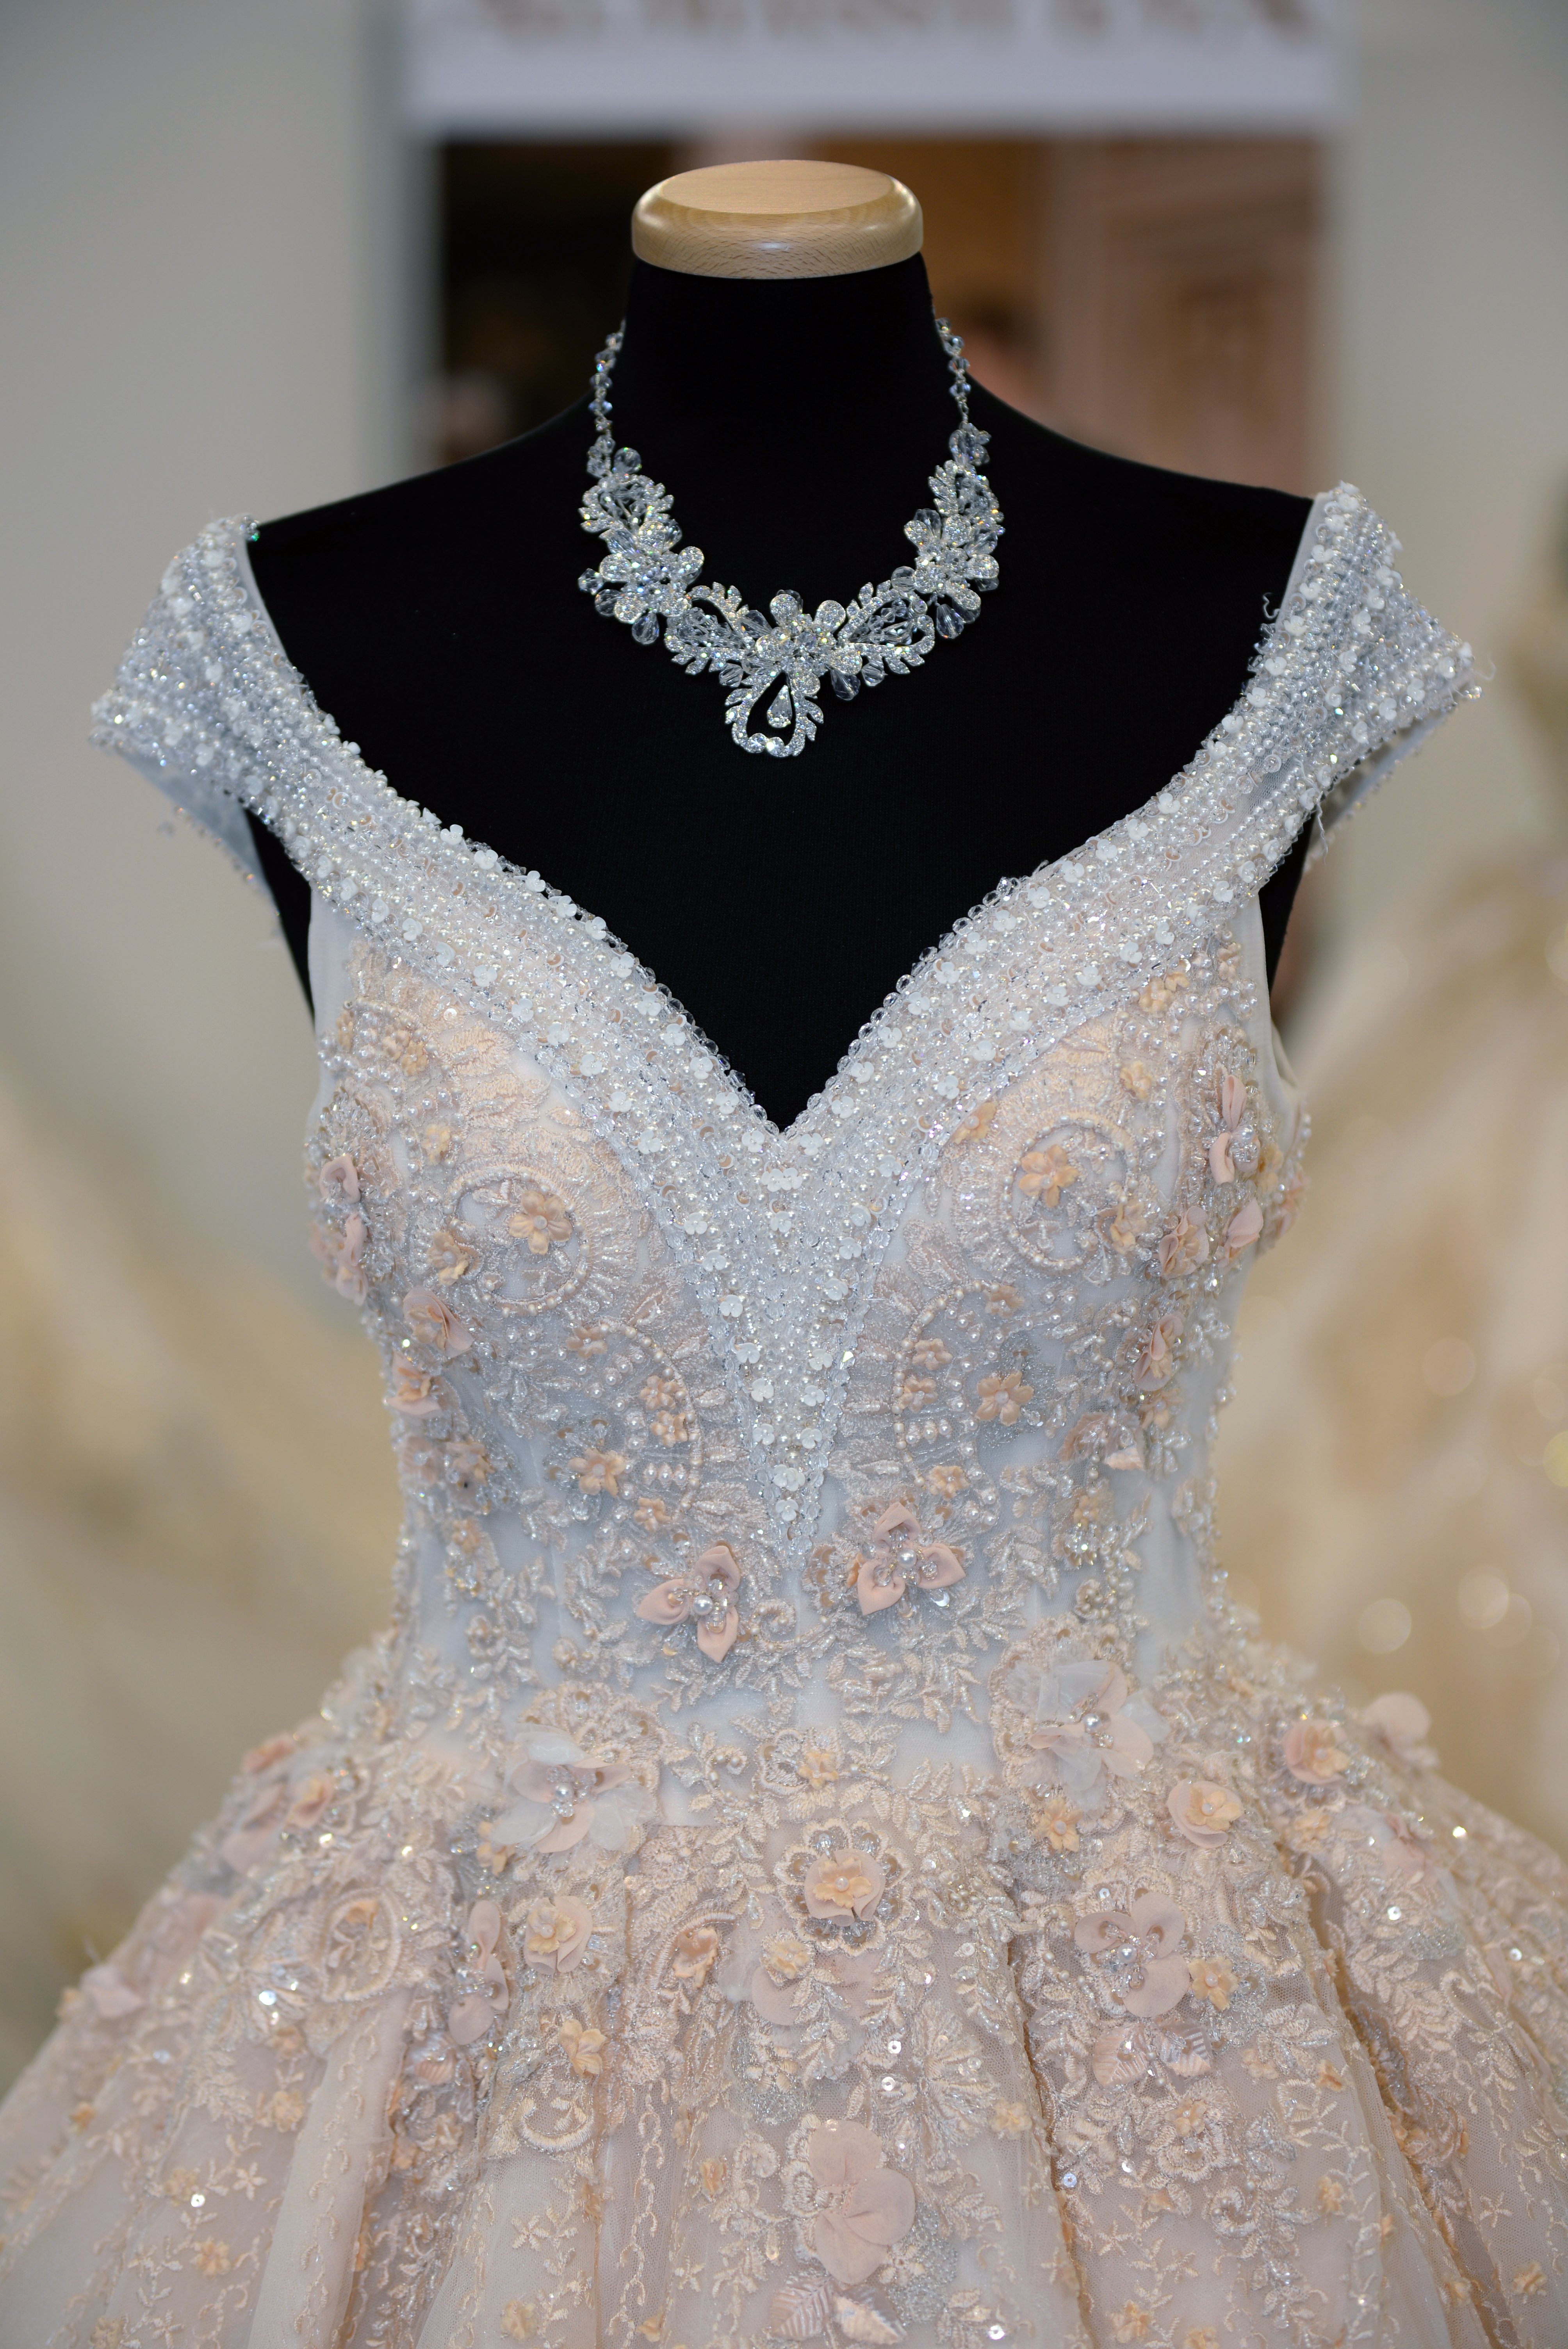 A beautiful wedding dress | Photo: Shutterstock